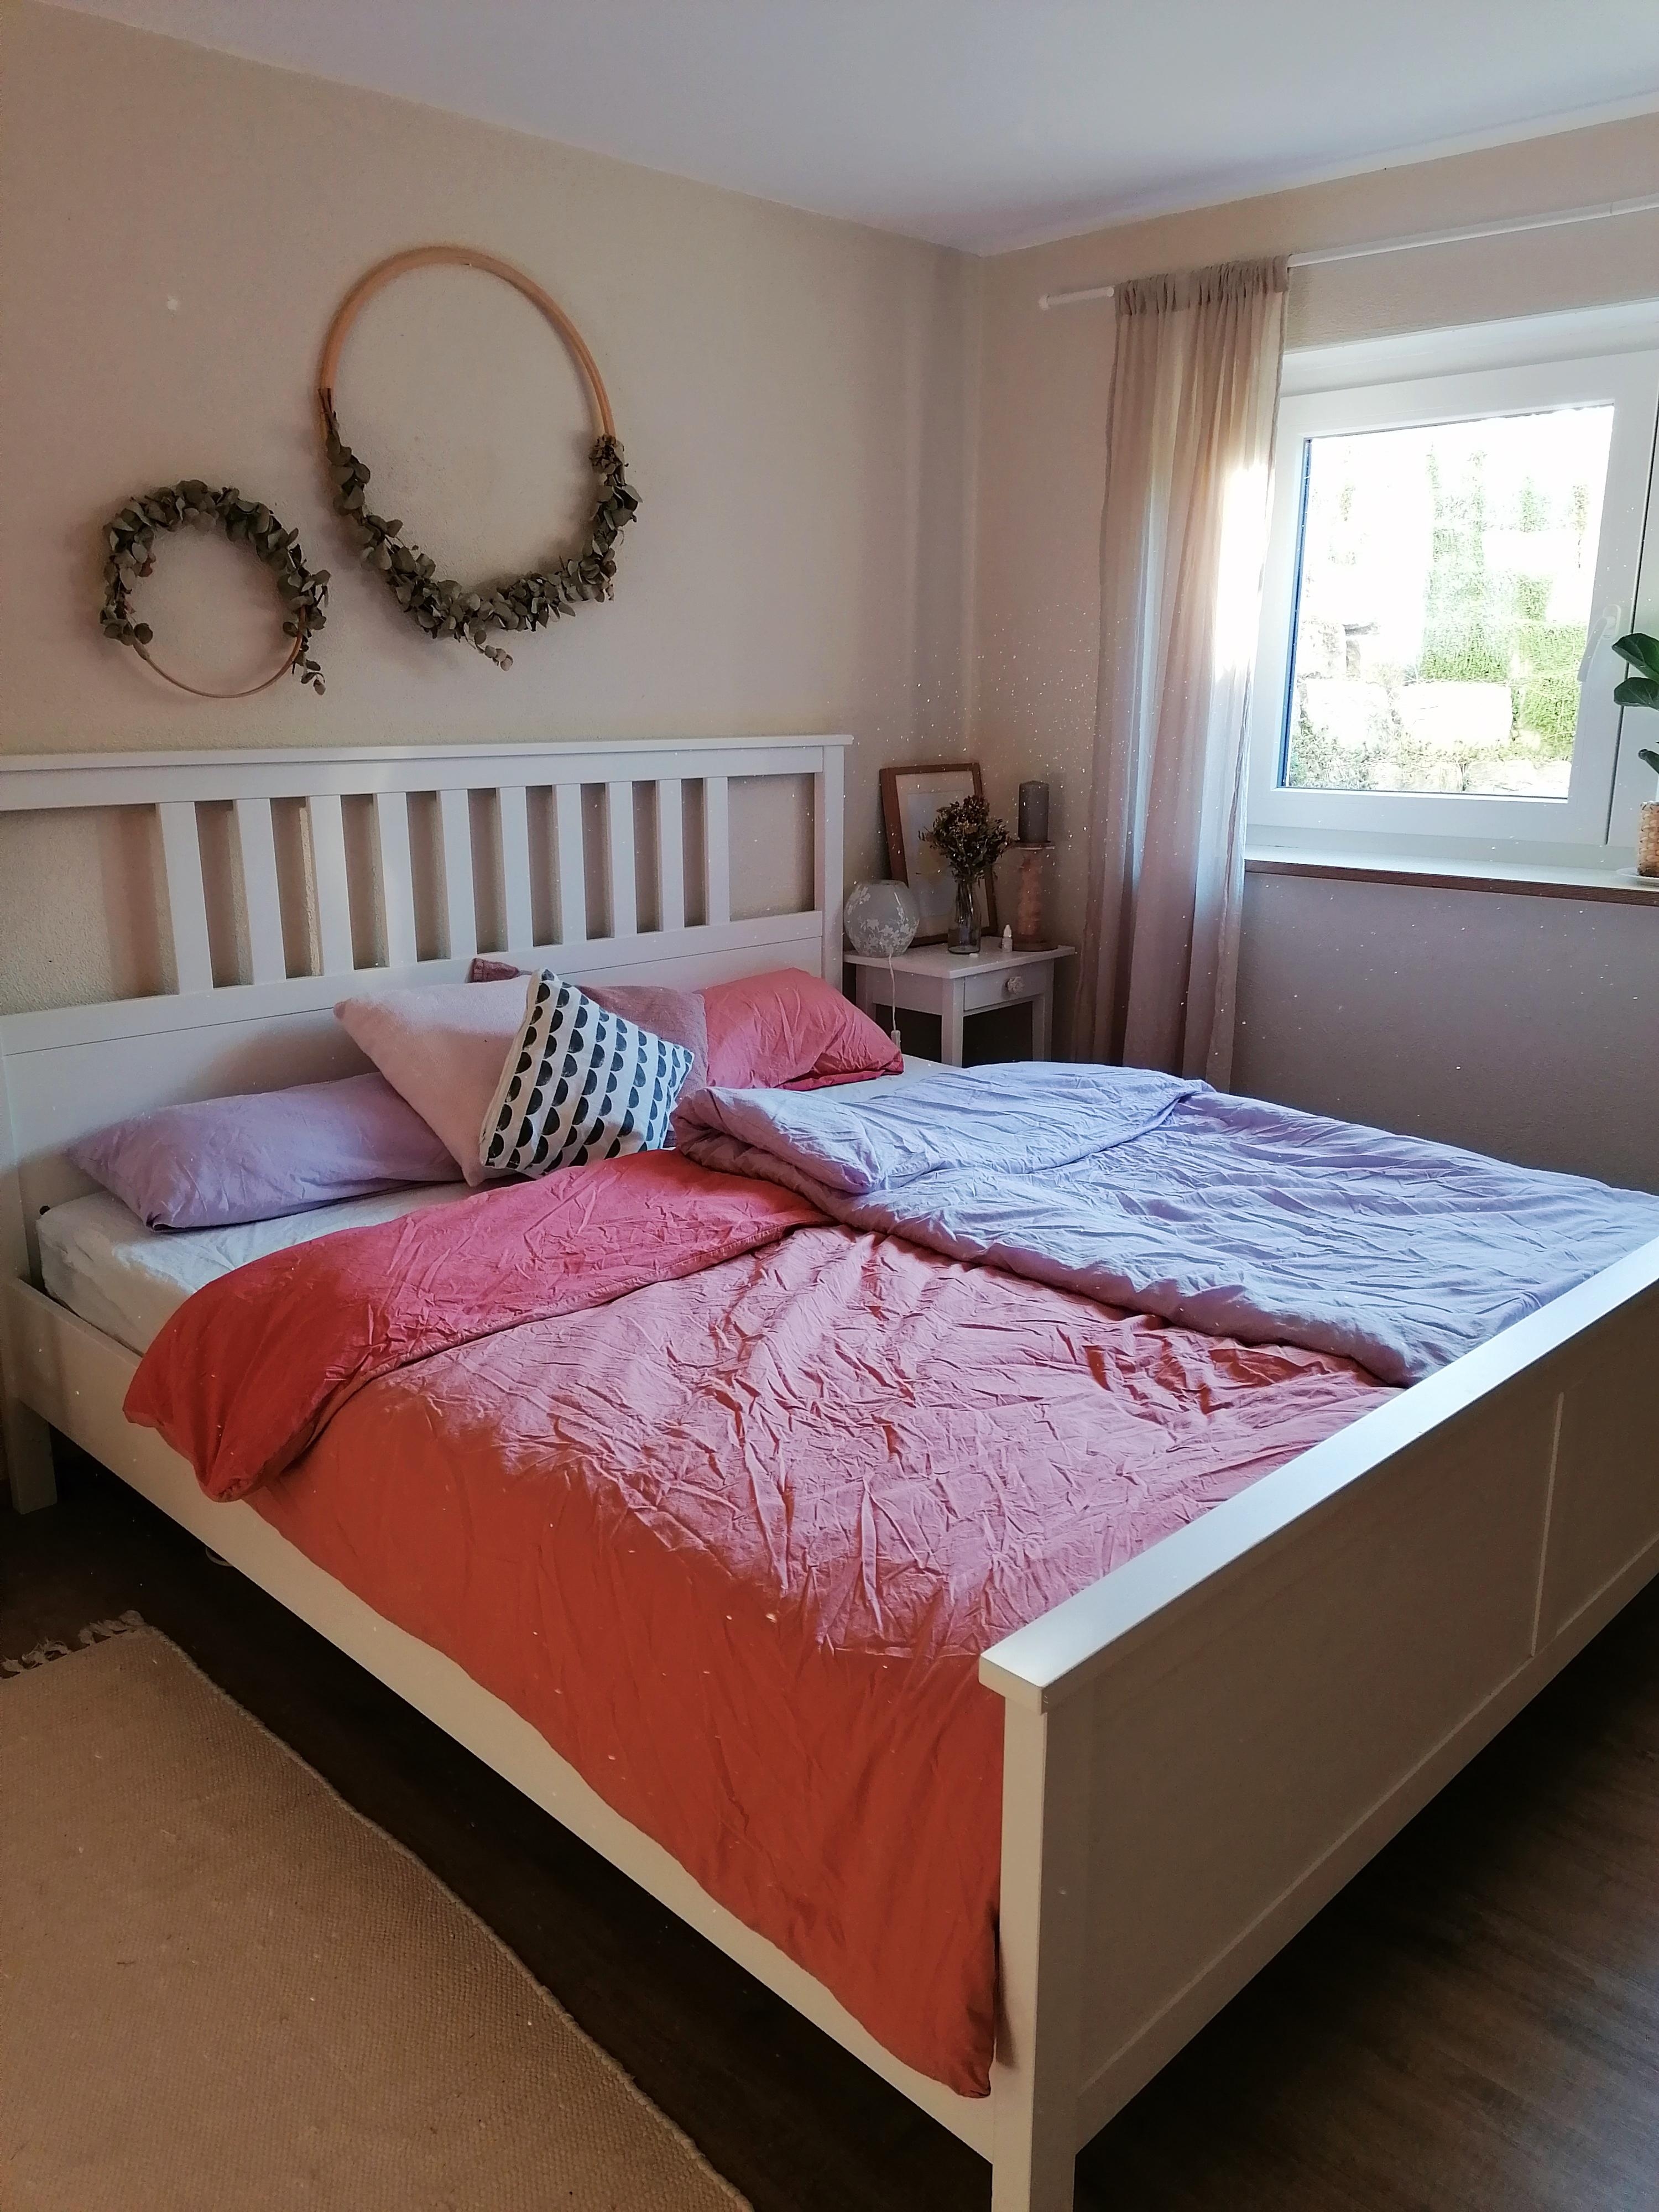 Im Bett muss es auch mal knallig sein!
#sleeping#pastell#lilac#blush#sheets#bed#sleepingroom#bedroom#home#hygge#interior